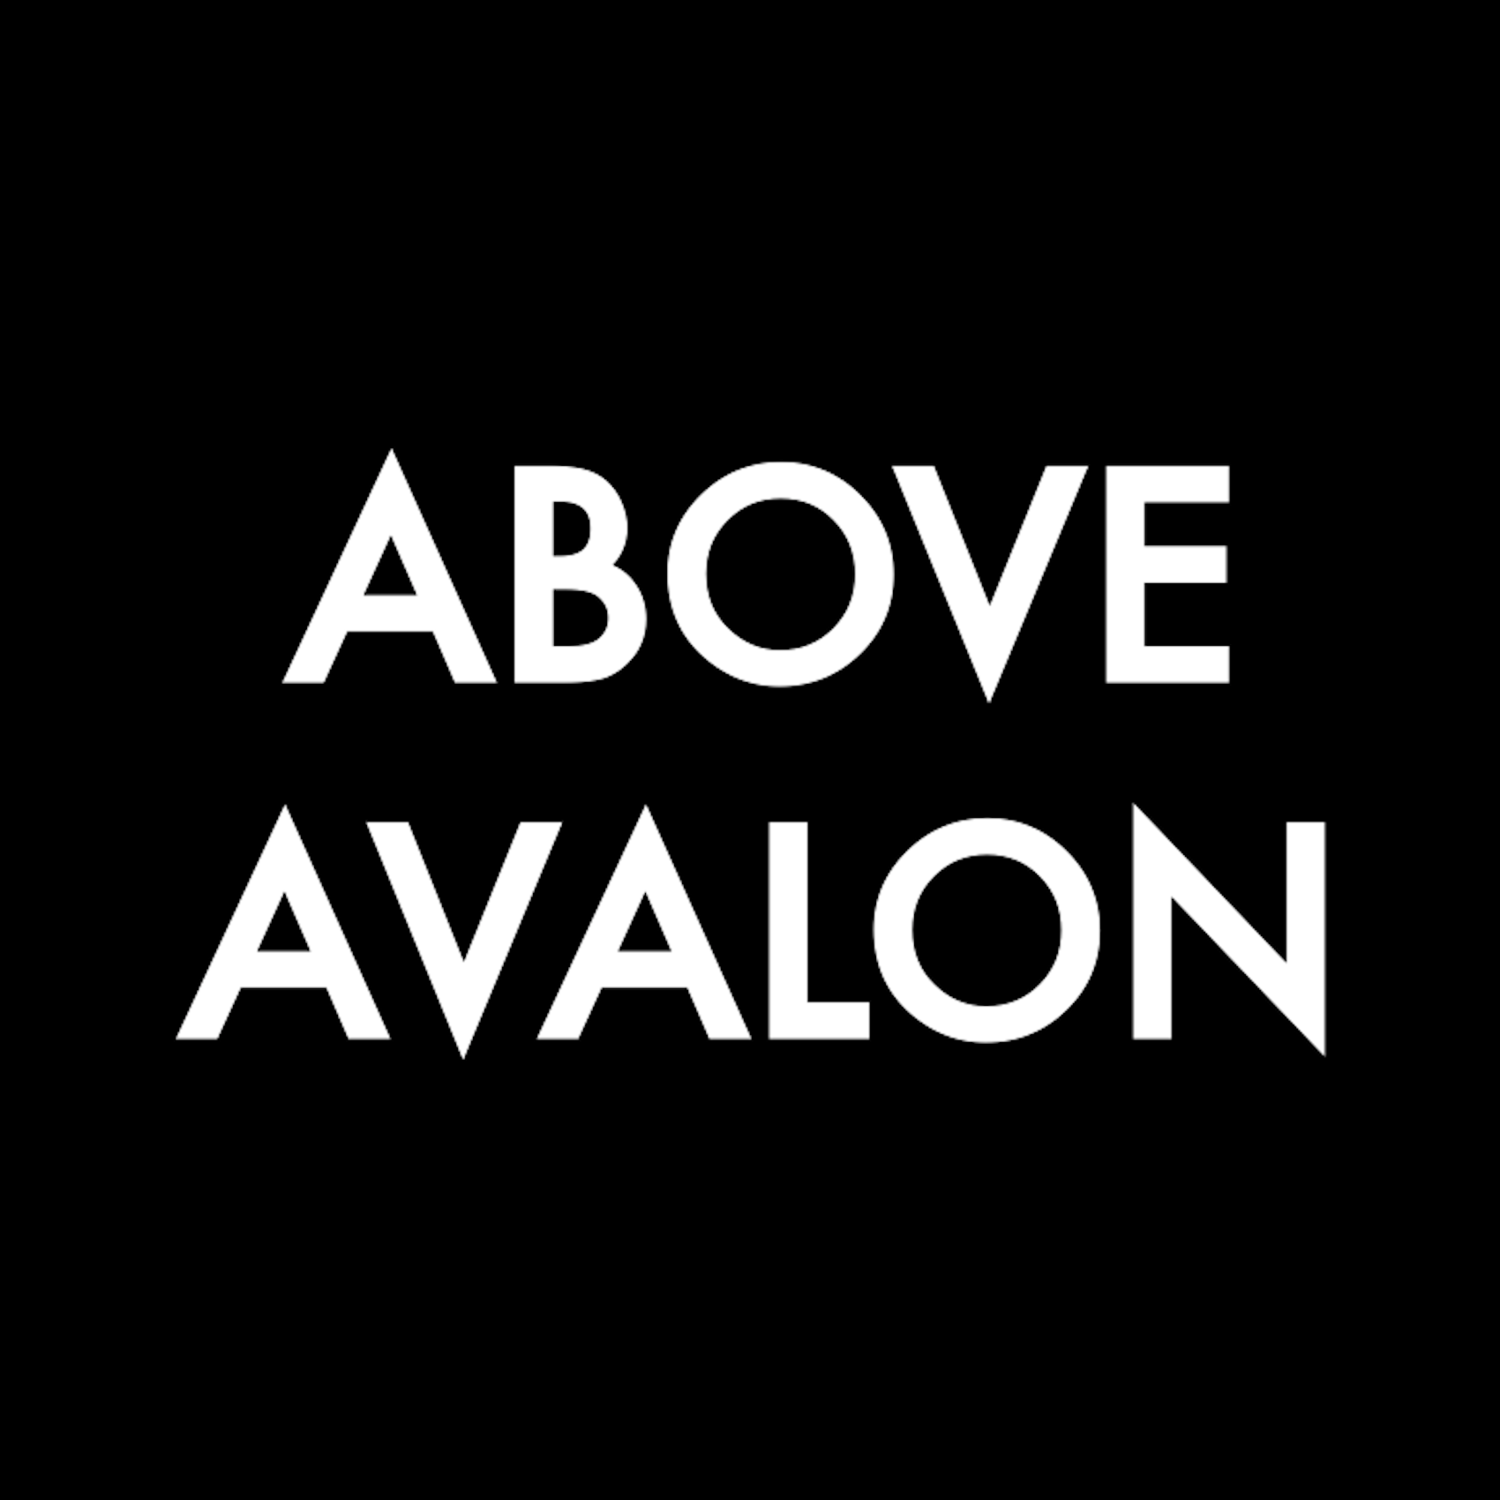 Above Avalon Podcast - roblox myth podcast